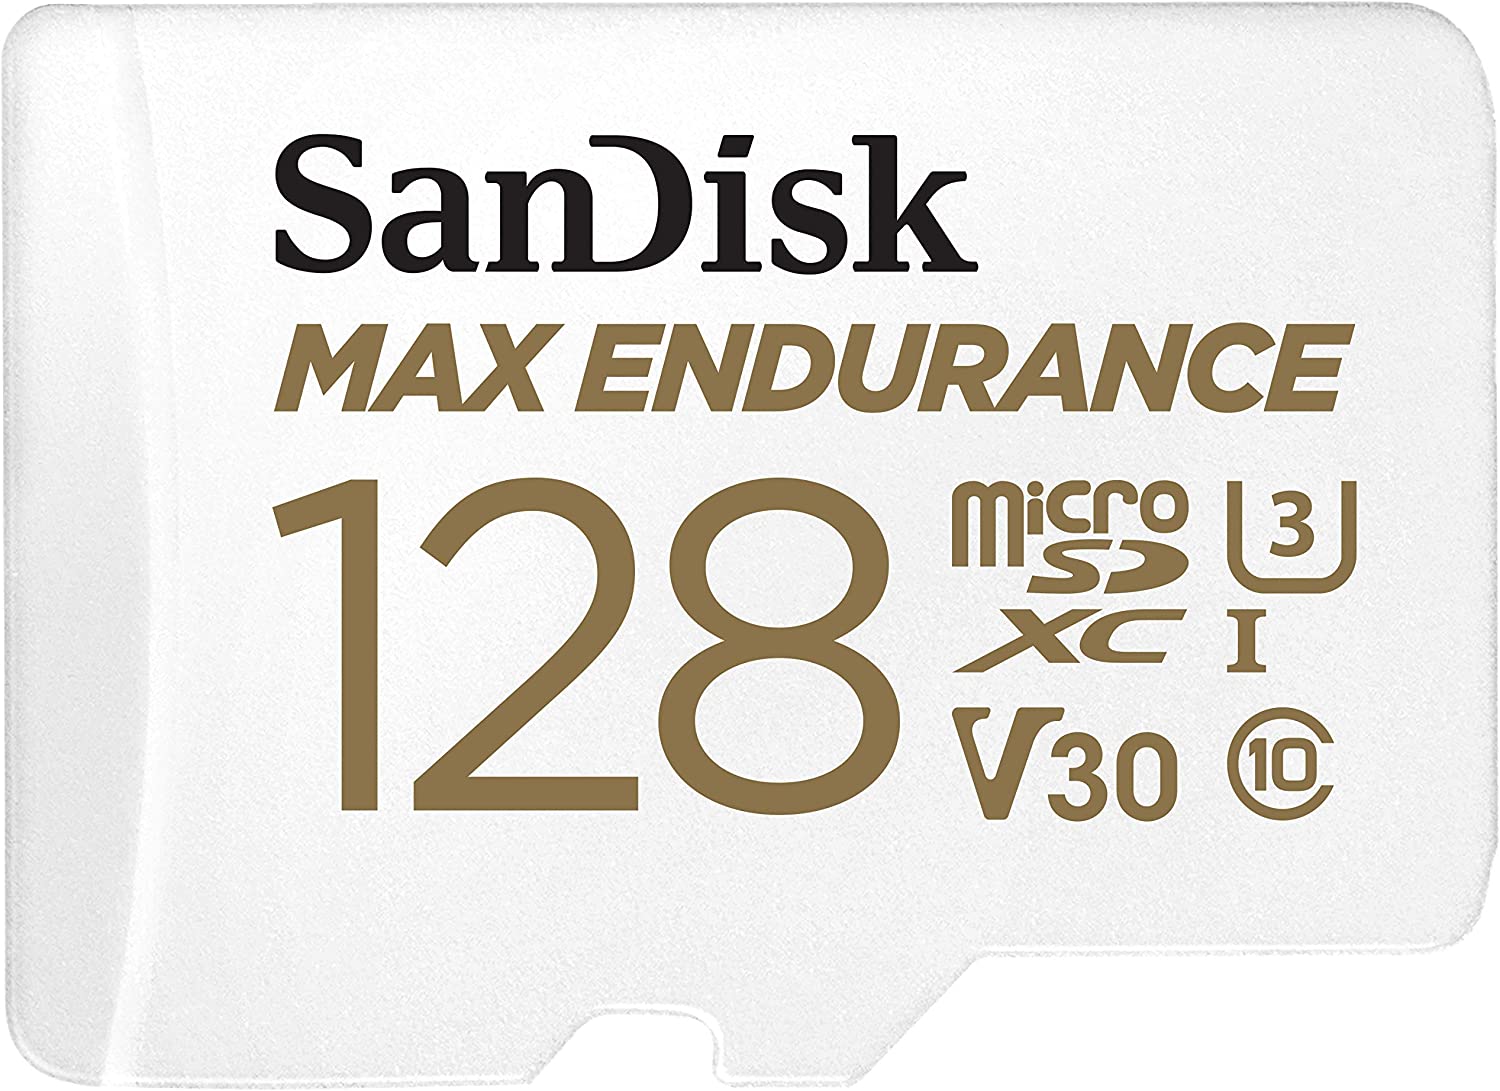 Sandisk Max Endurance microsd class 10 128 GB Memory cards